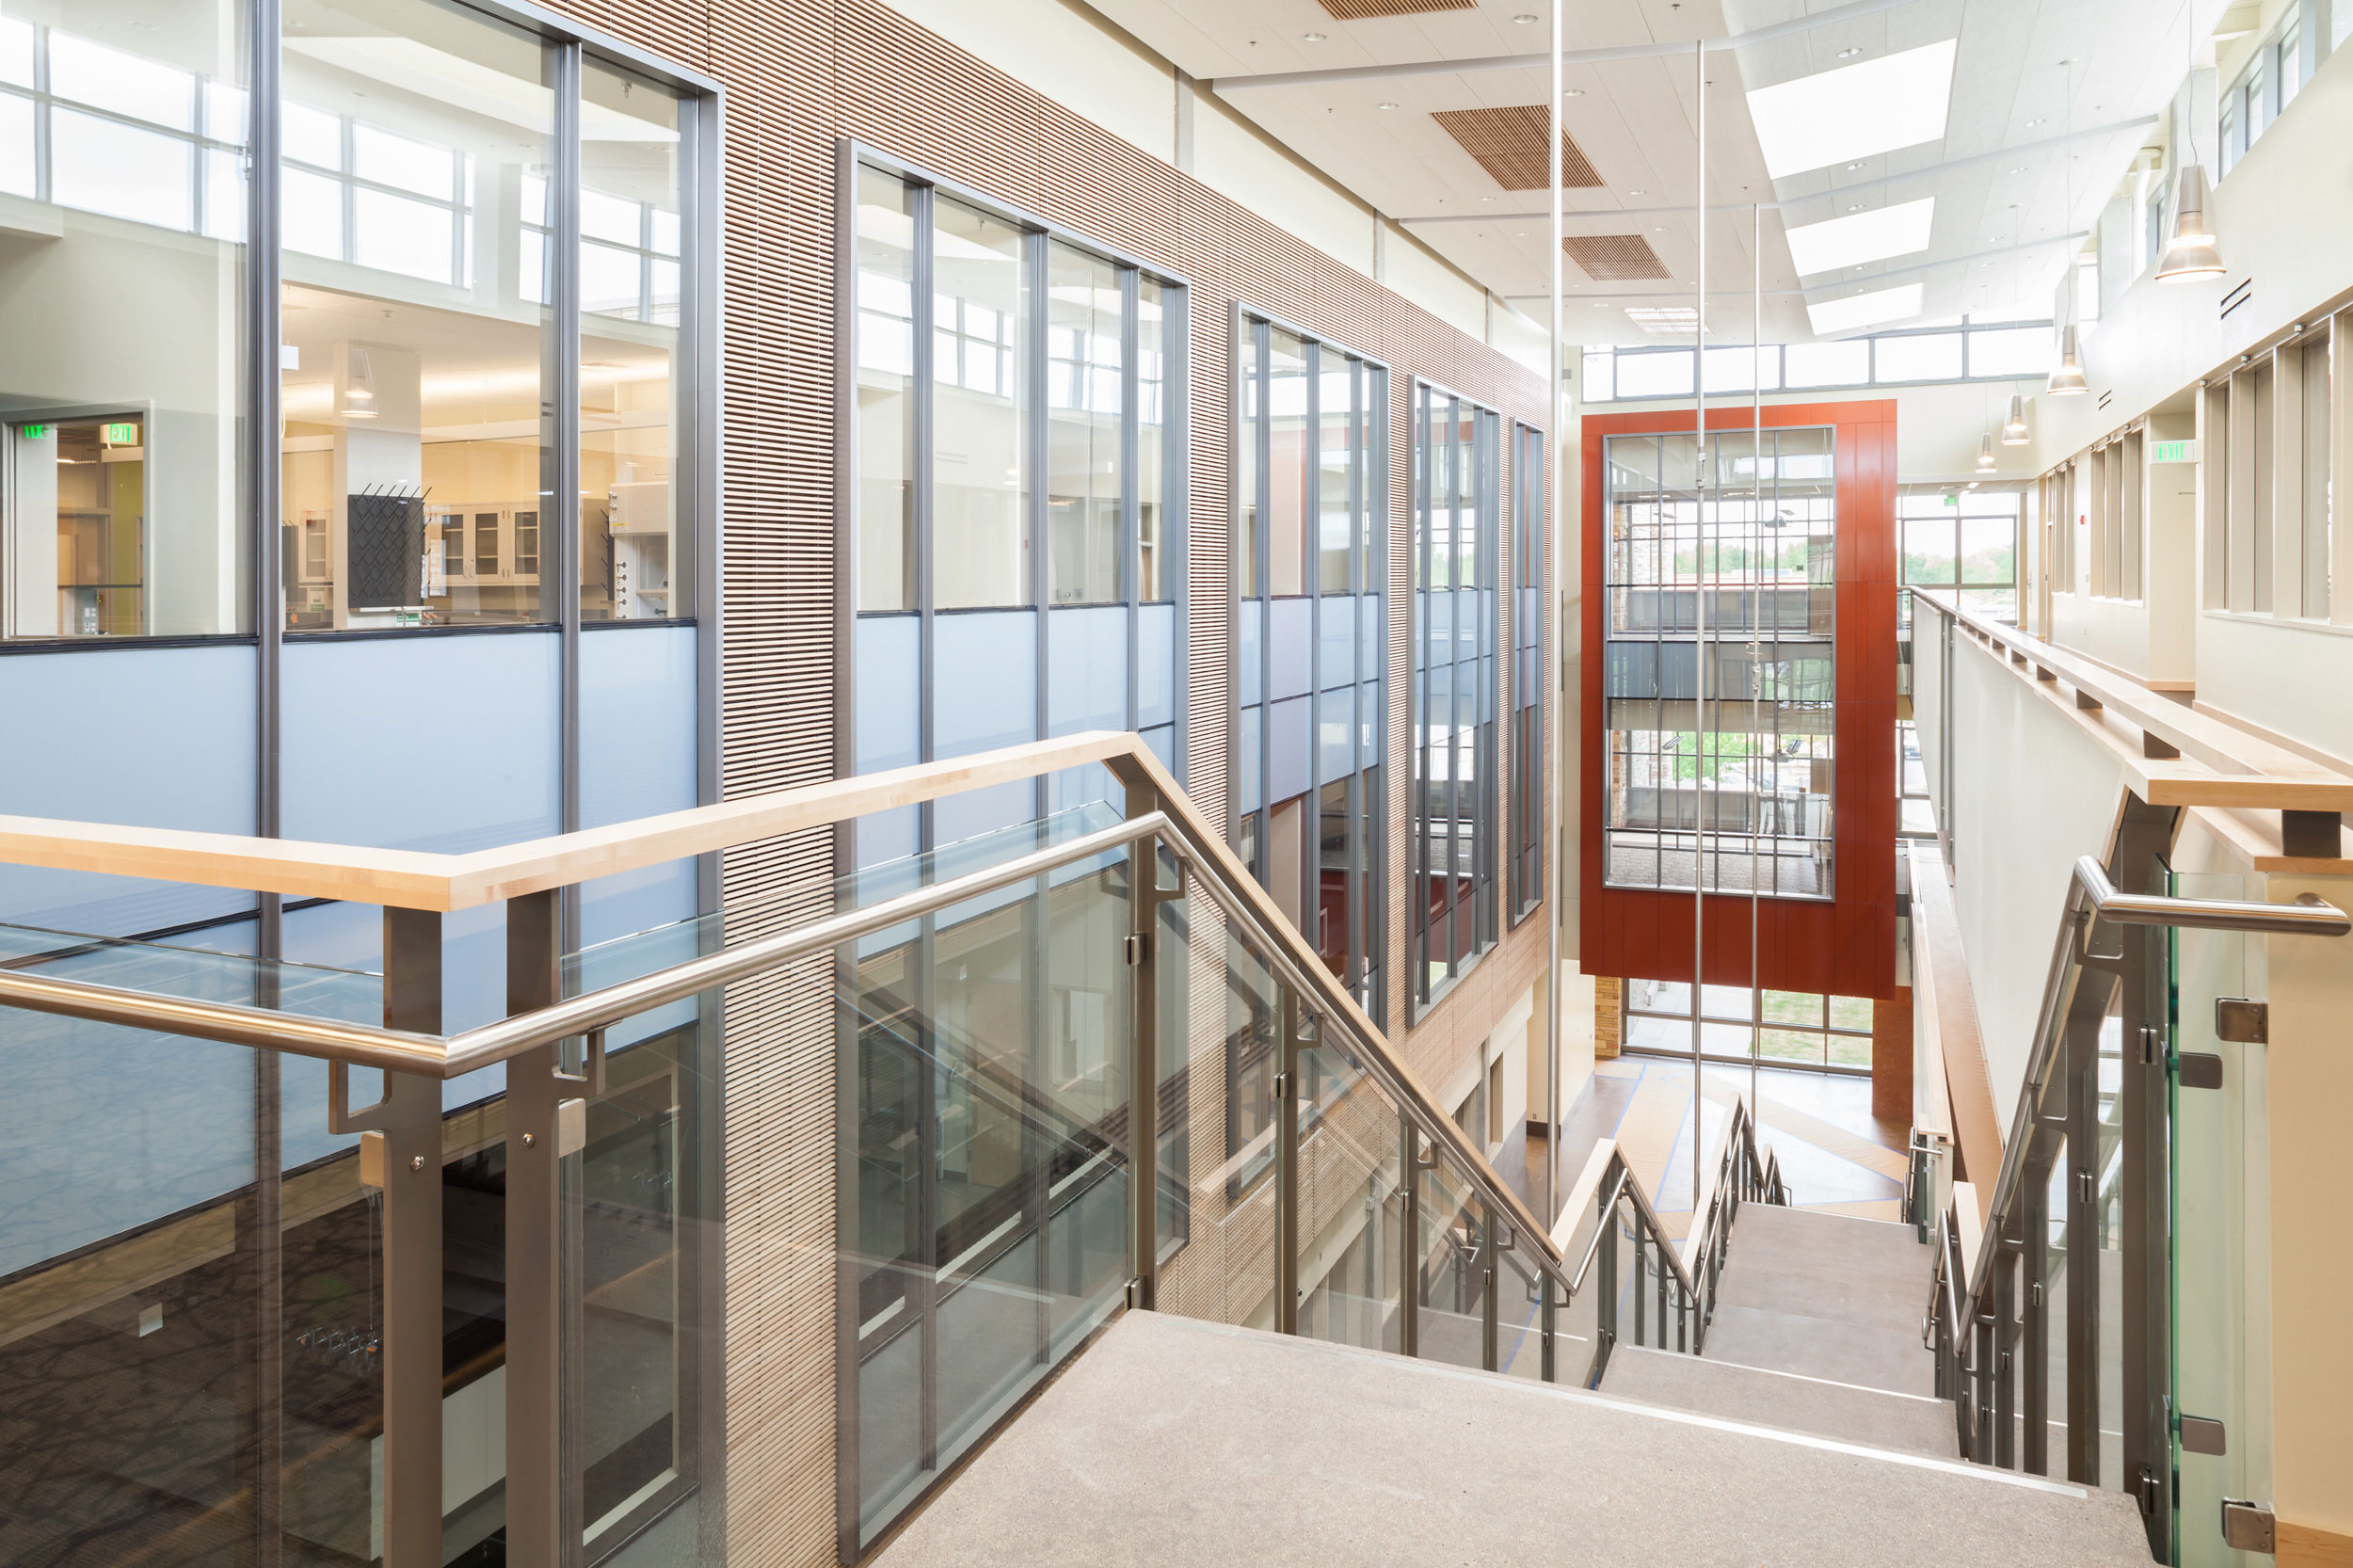 Large open hallway of the bioengineering building at CSU